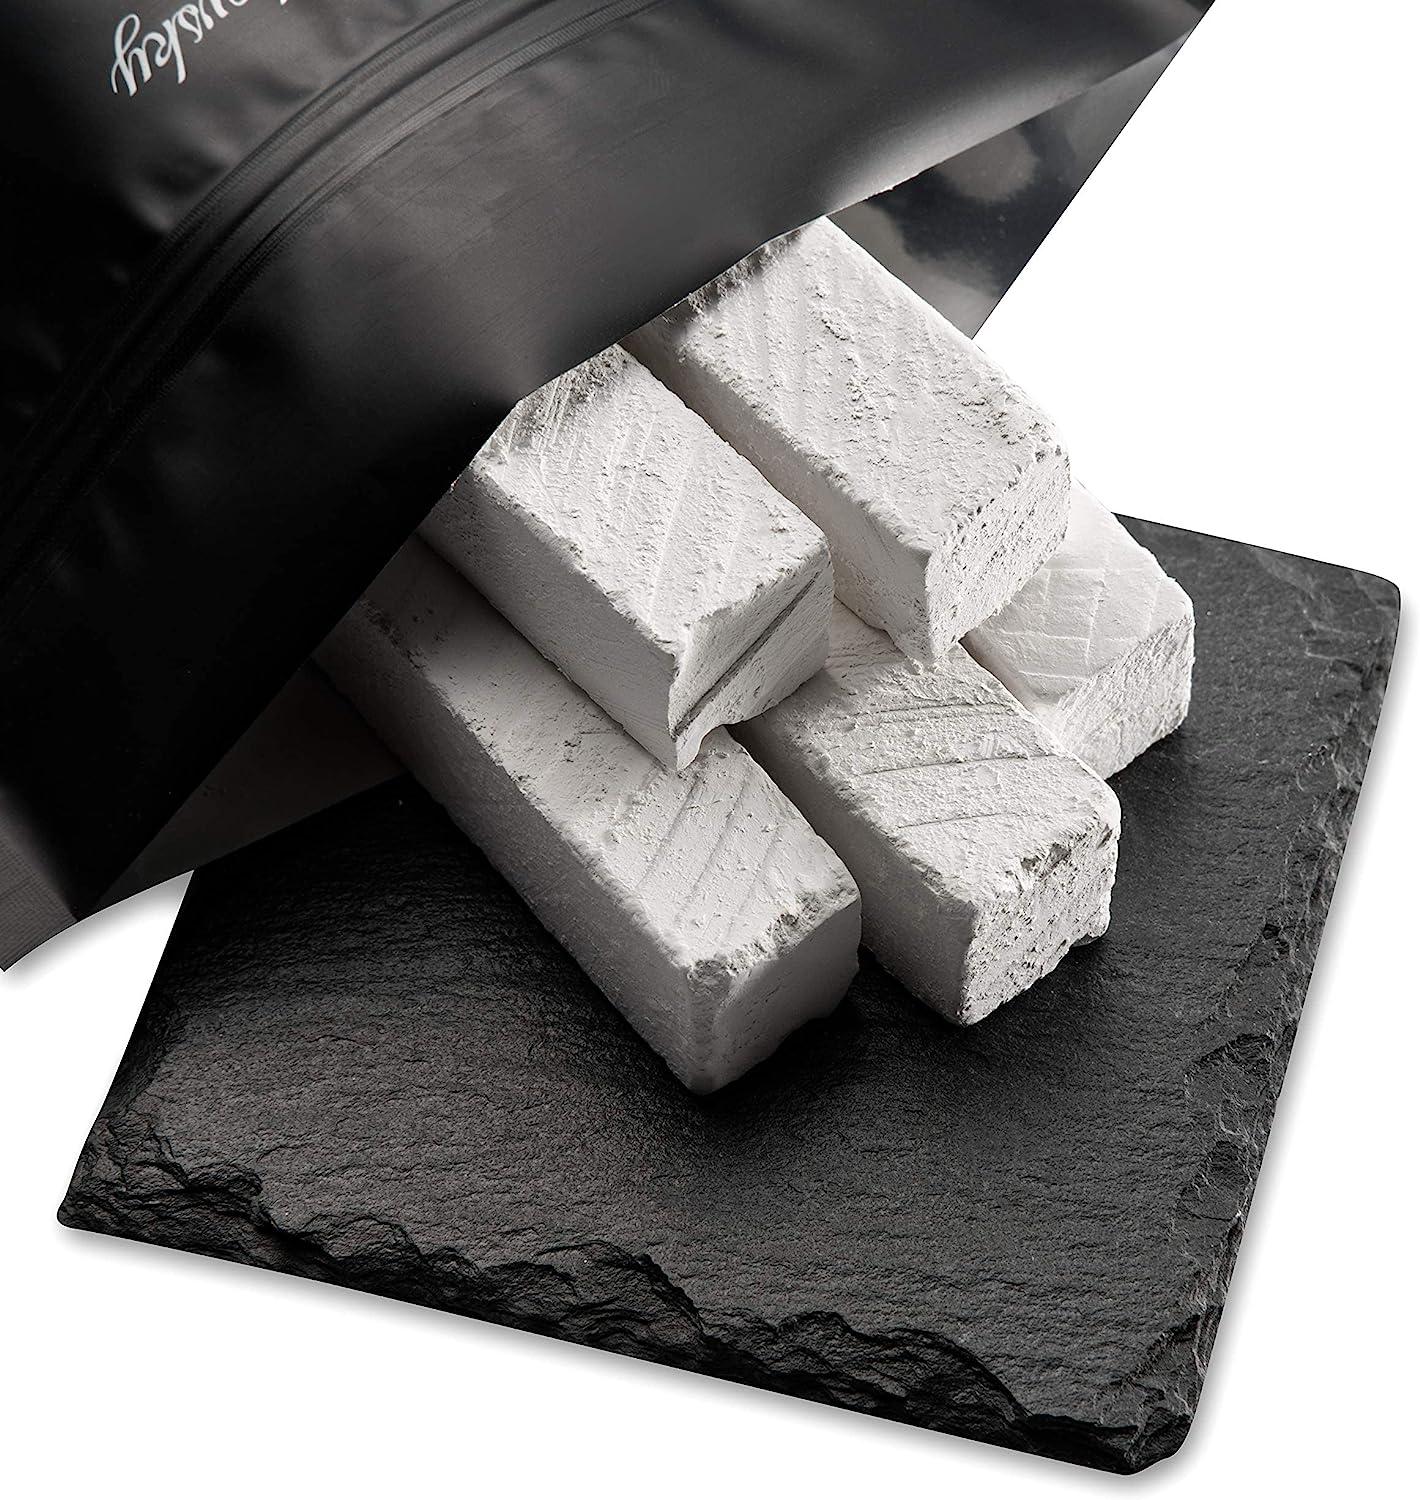 UCLAYS  BELGOROD edible Chalk - buy Belgorod edible chalk chunks (lump)  natural for eating (food): reviews, sale, price.